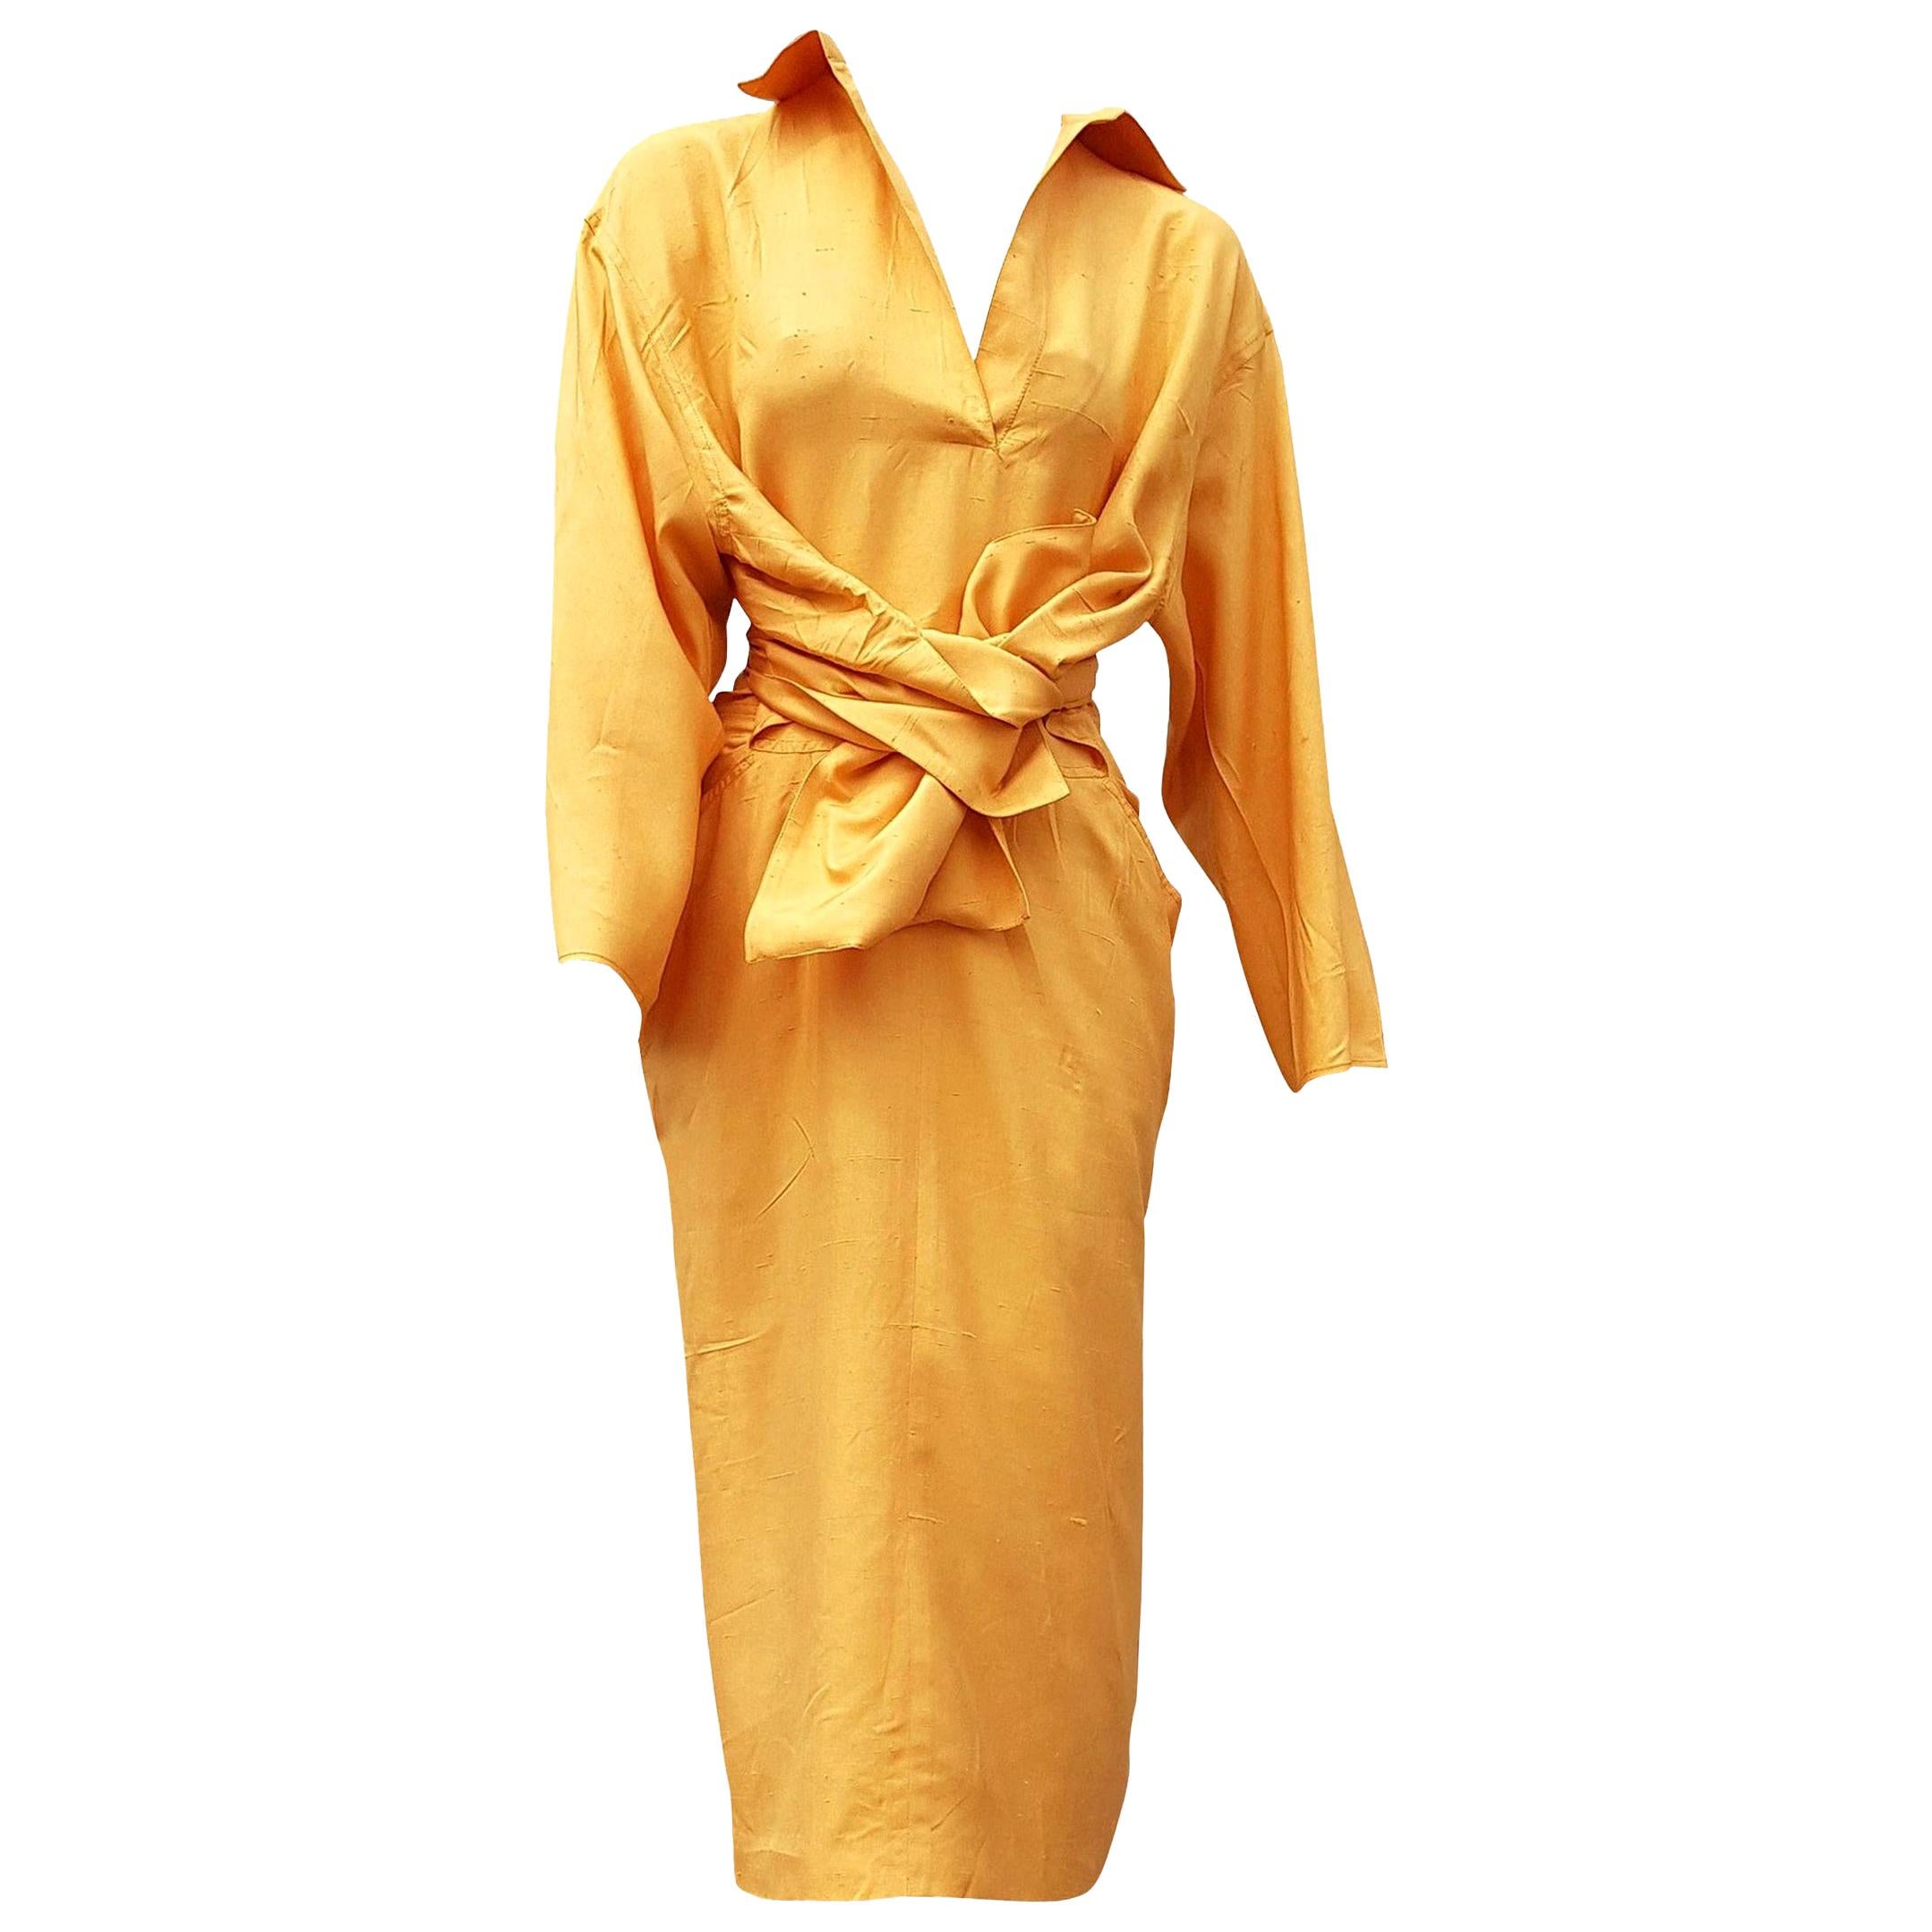 Gianfranco FERRÉ "New" Haute Couture Yellow Silk Shantung Dress - Unworn For Sale